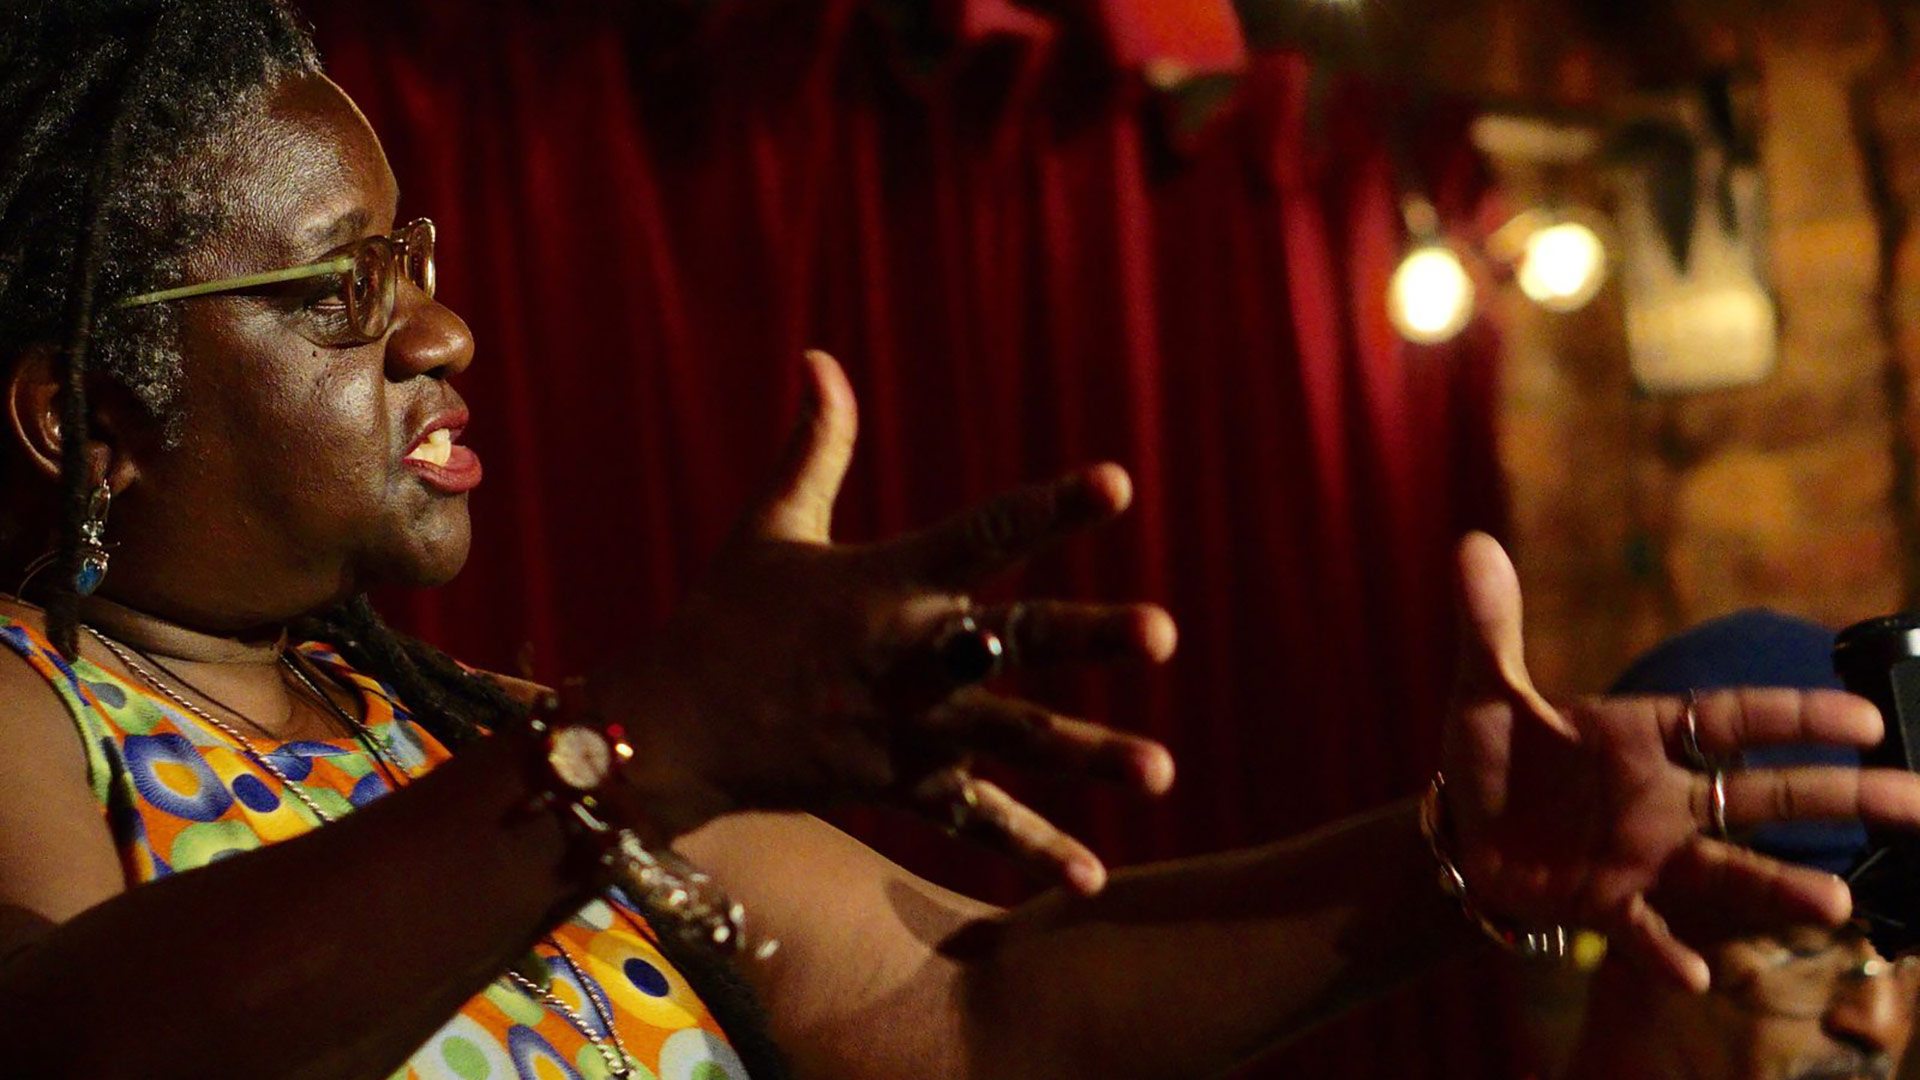 Vienna Carrol sings of self-determination, strength in Bayou Theater